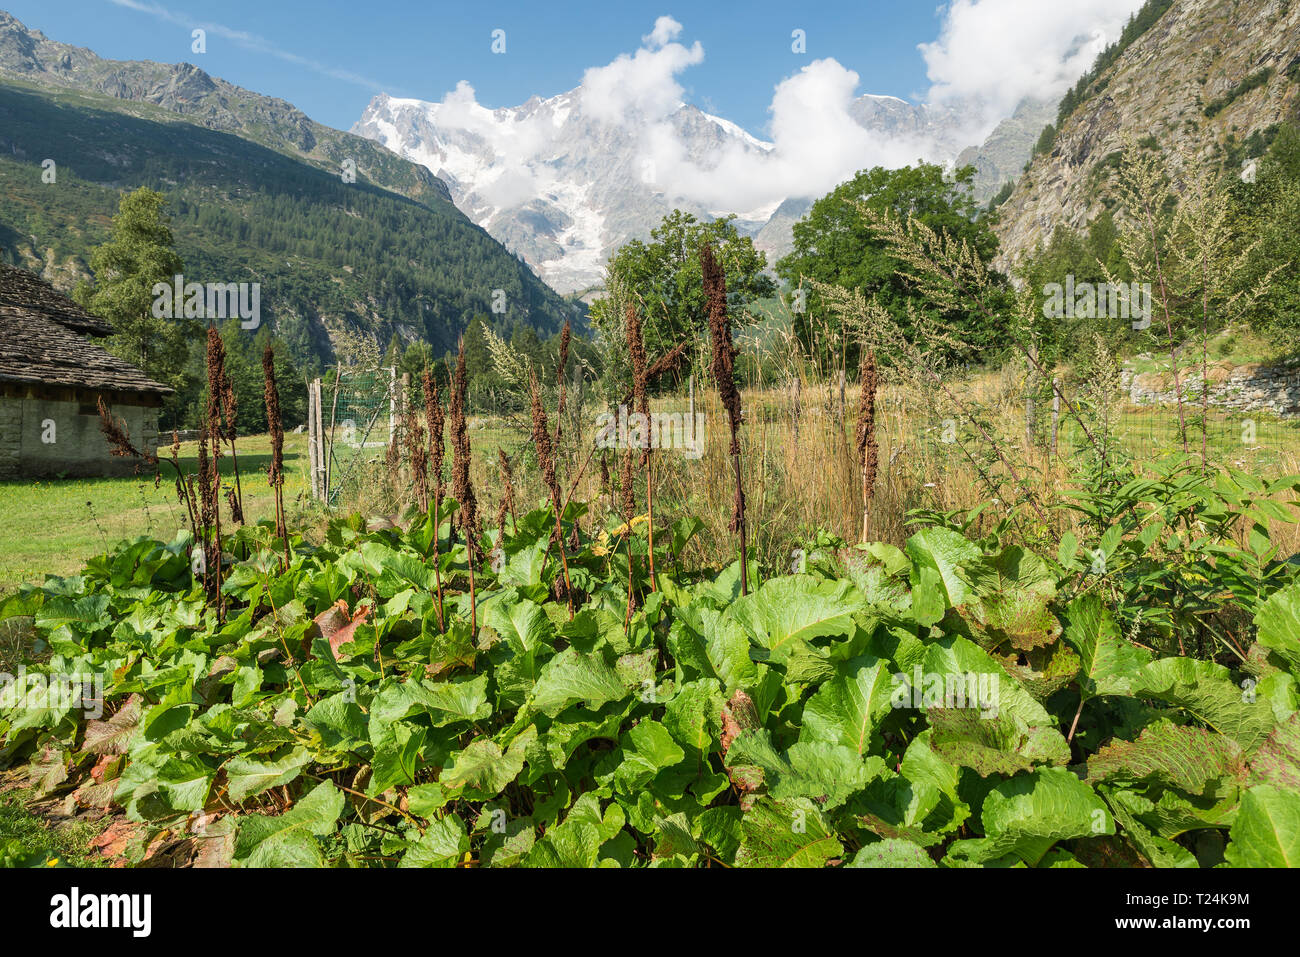 Rumex alpinus, common name monk's-rhubarb, Munk's rhubarb or Alpine dock. Italian Alps, mid-August Stock Photo